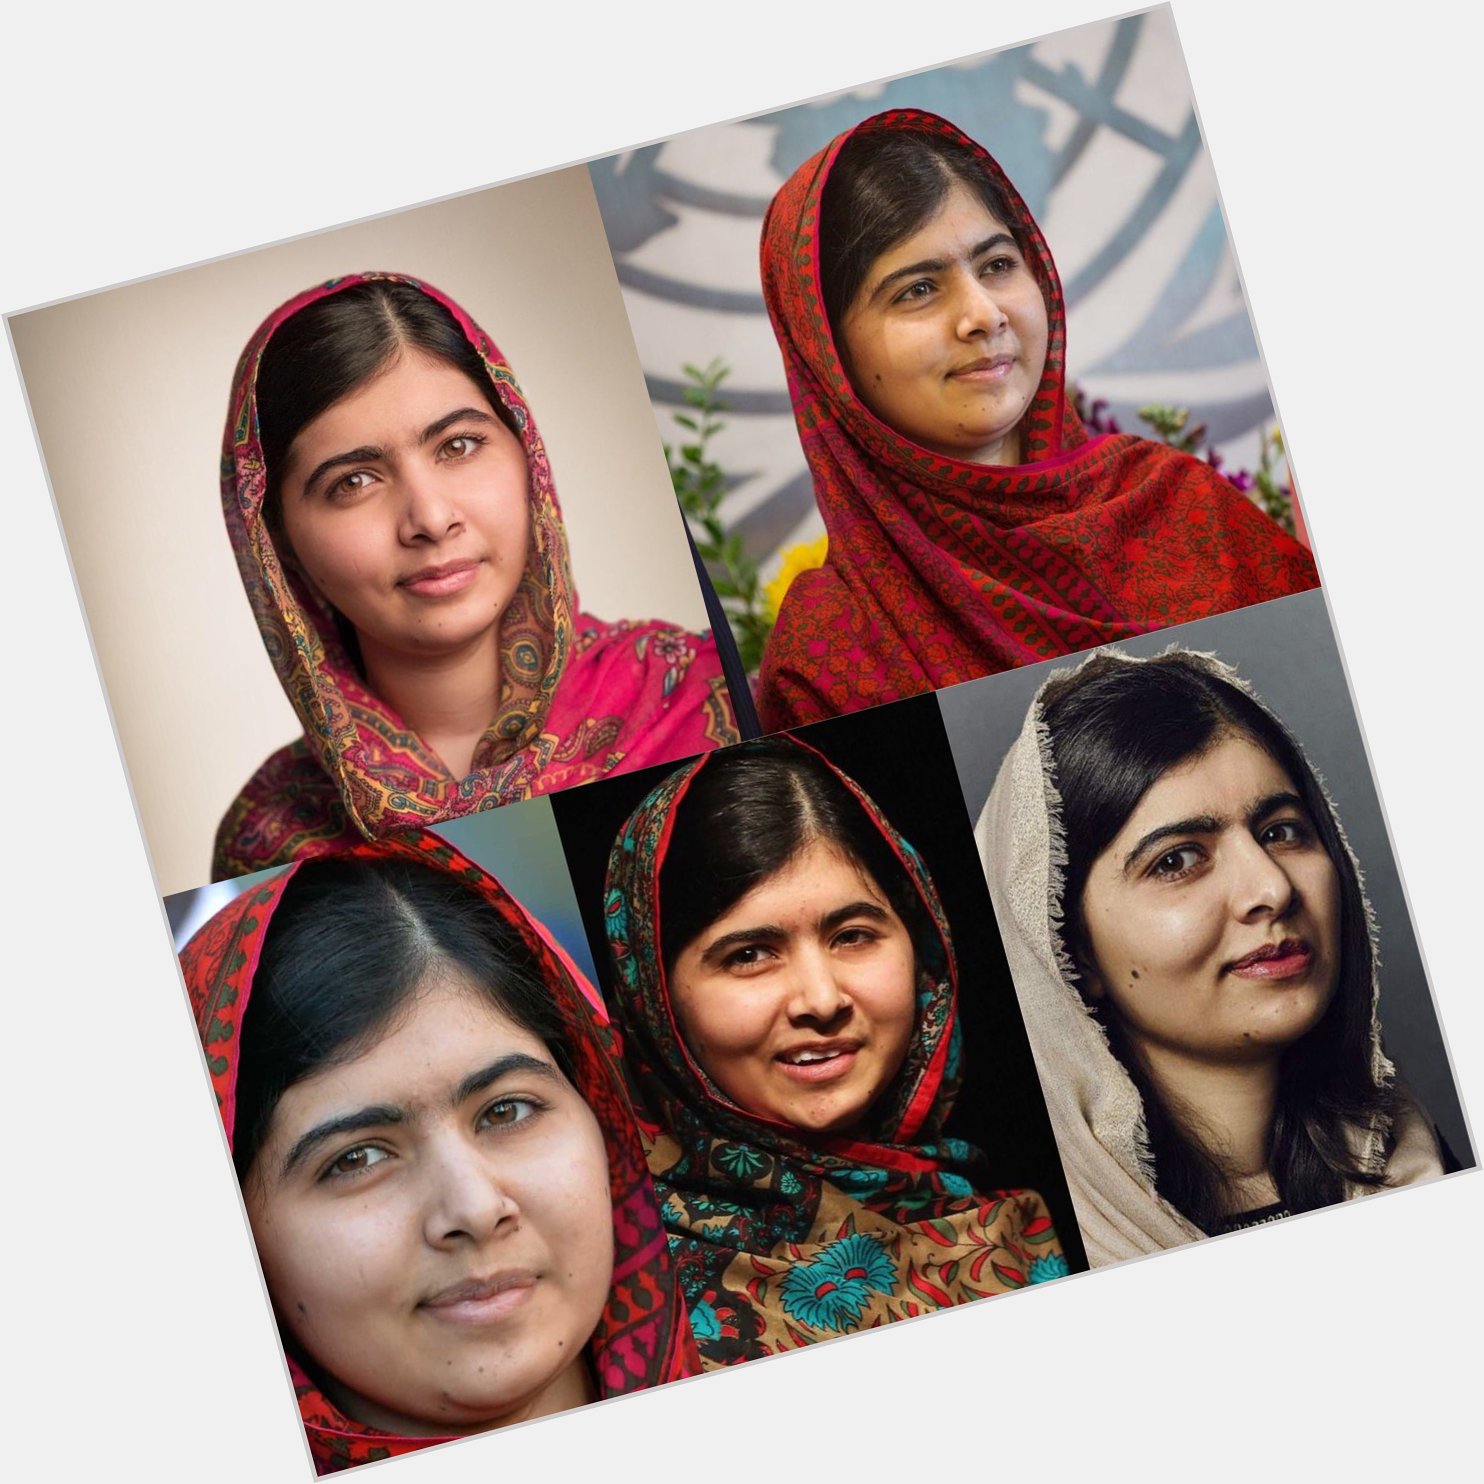 Happy 23 birthday to Malala Yousafzai. Hope that she has a wonderful birthday birthday.        